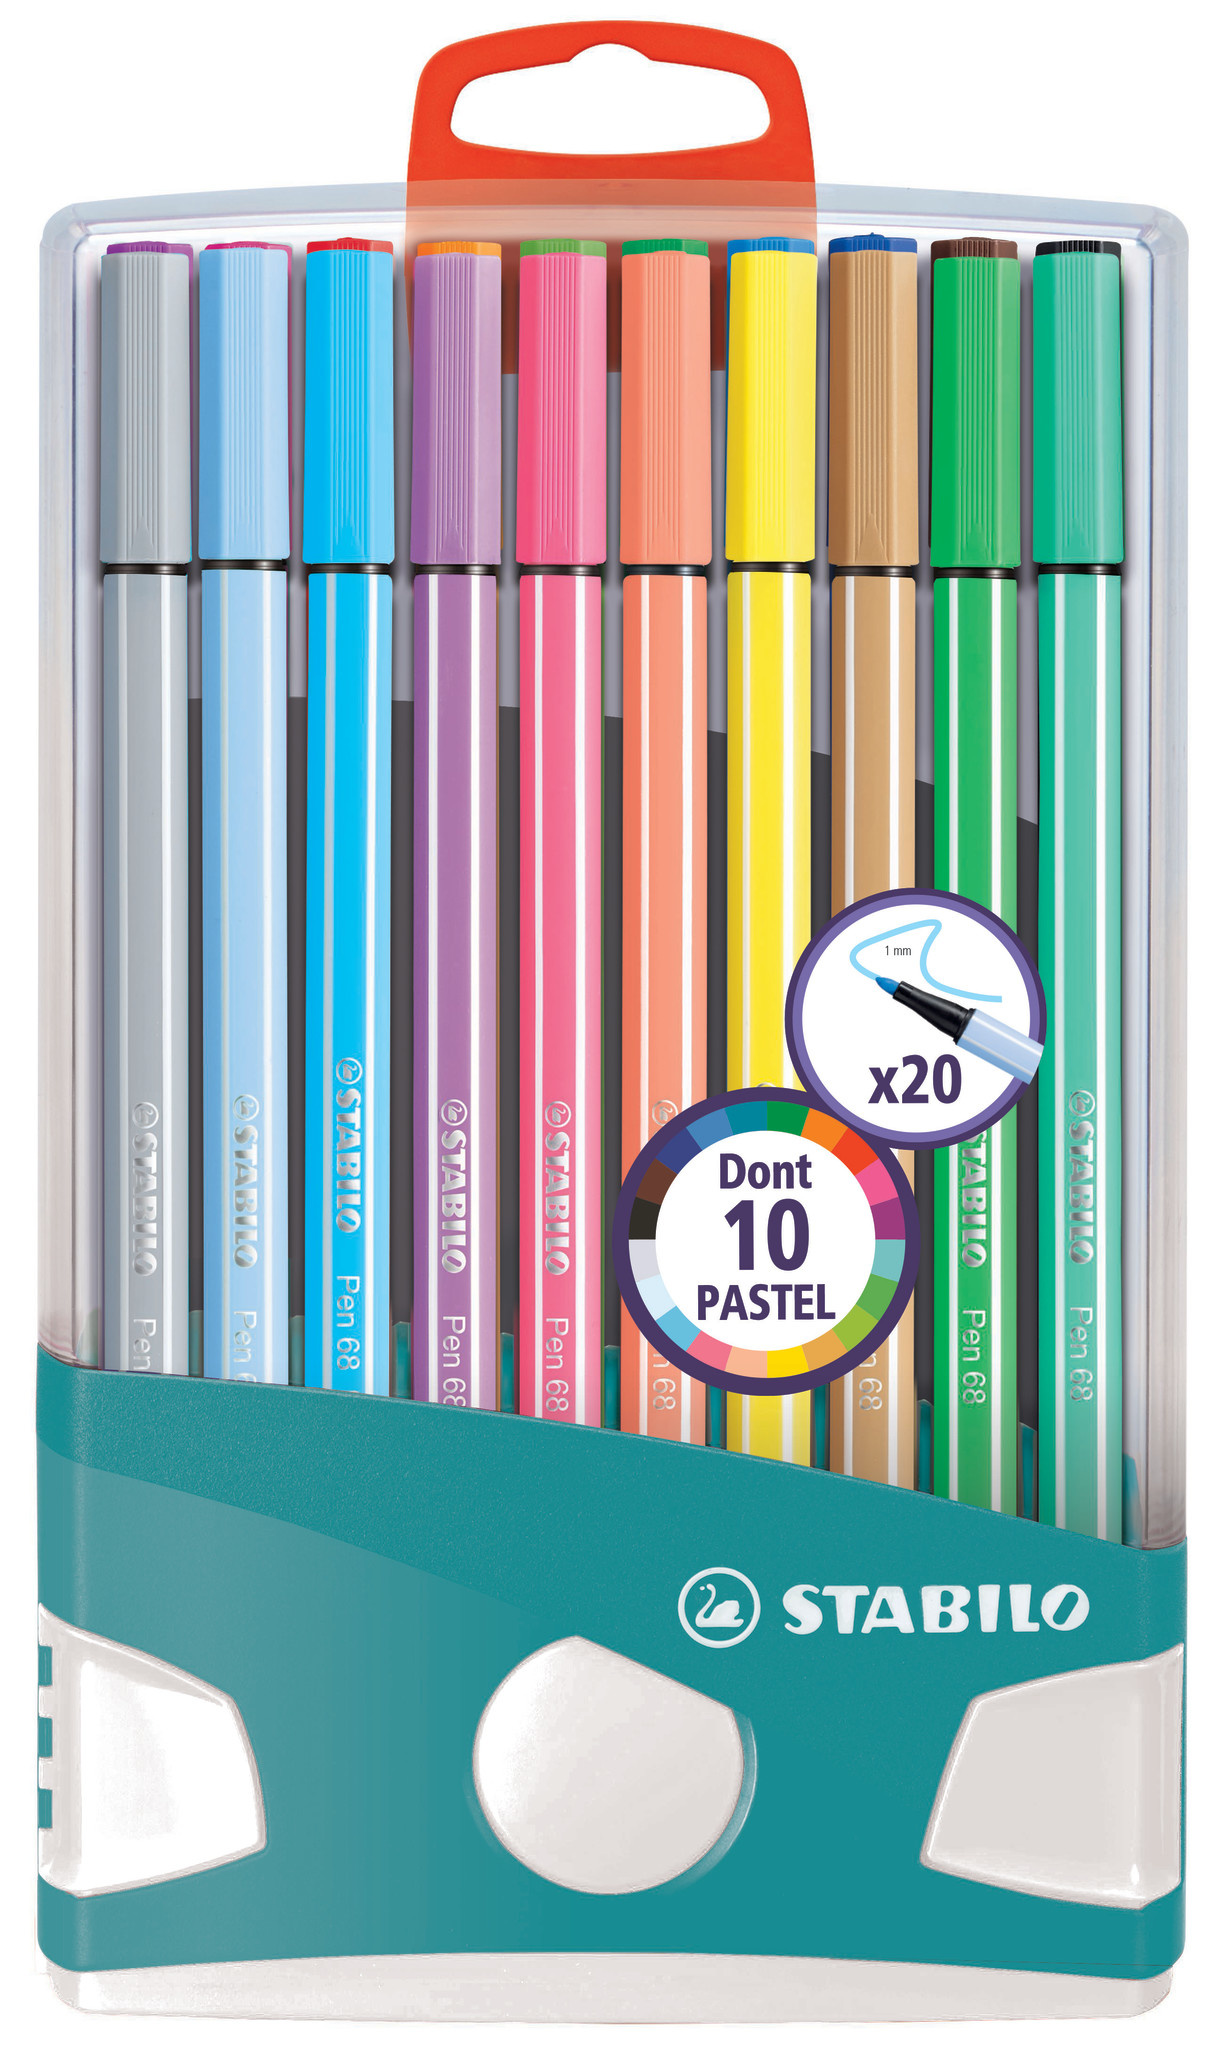 ColorParade de 20 feutres de dessin STABILO Pen 68 boîtier gris/fuchsia -  BuroStock Guyane